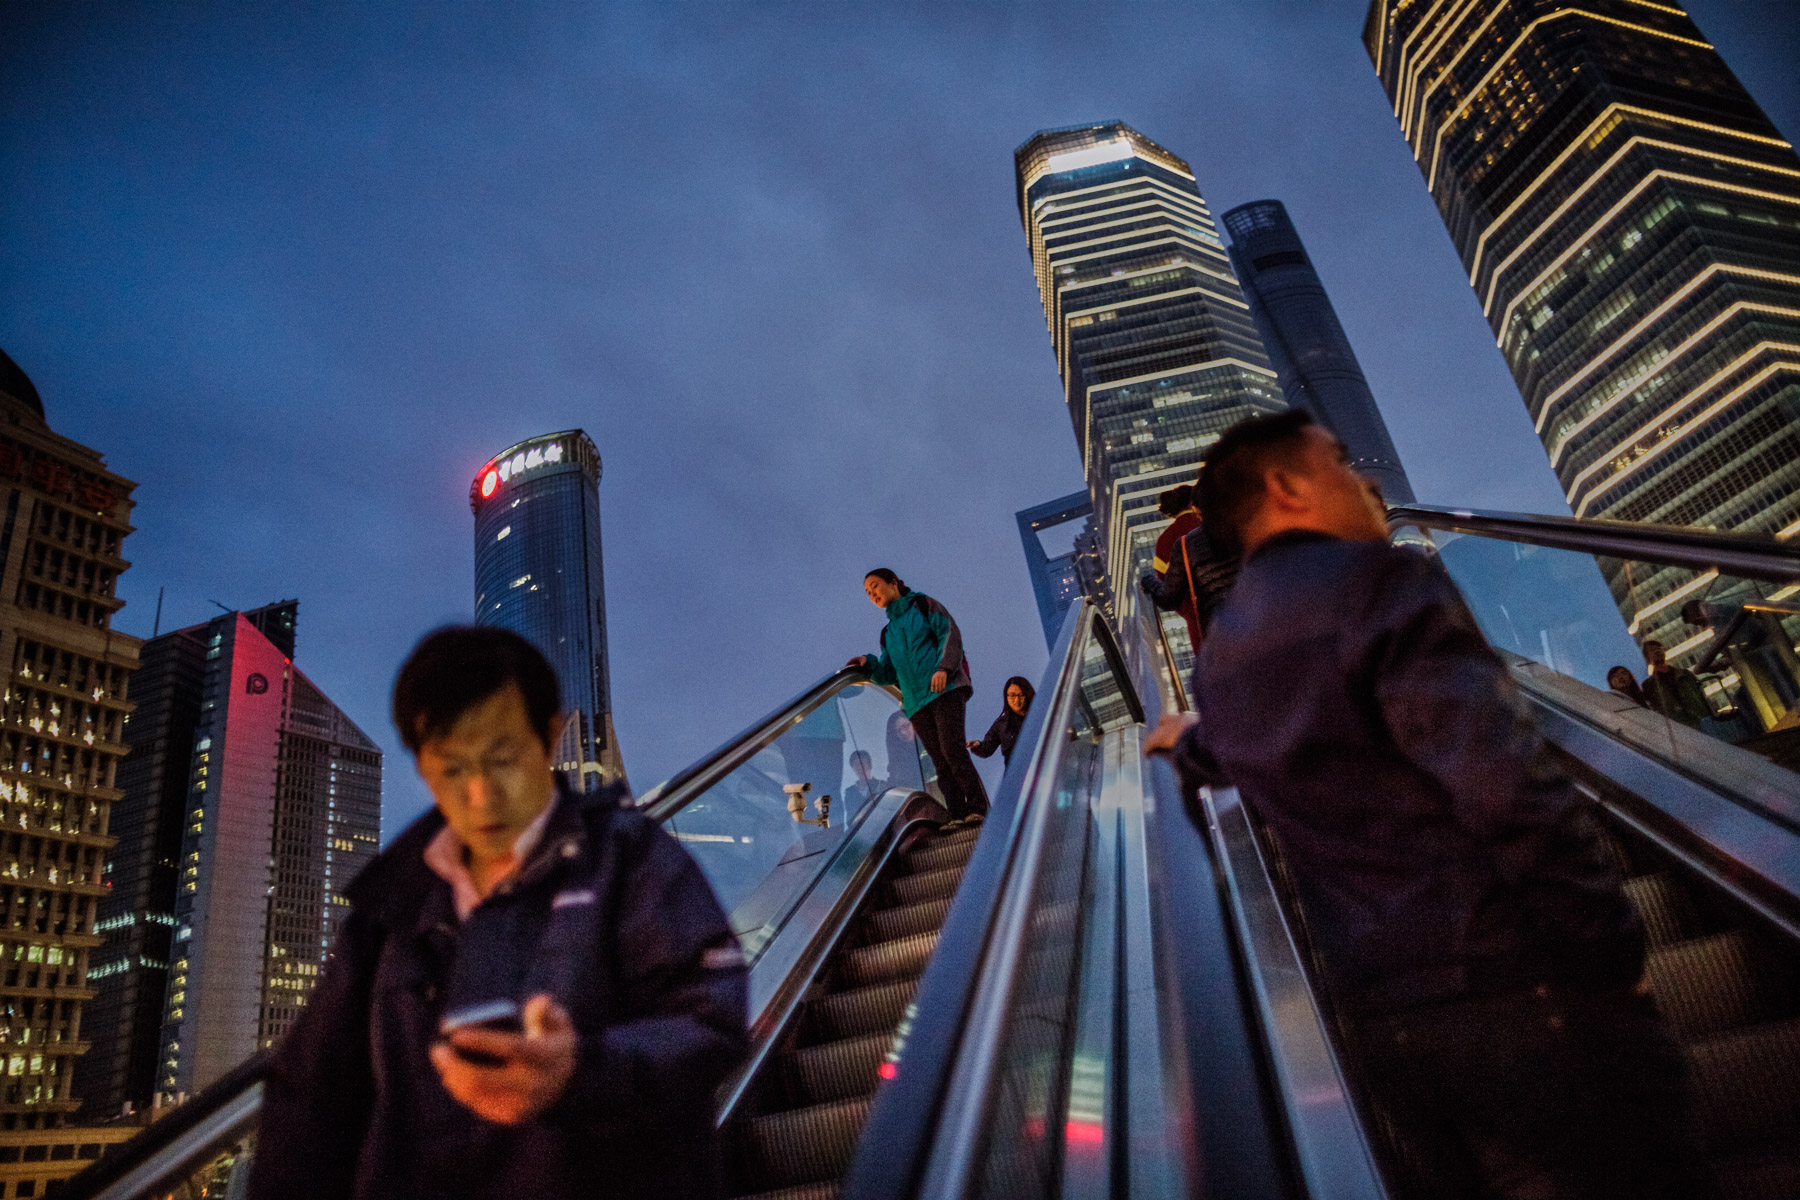 Dusk and escalators in Shanghai.